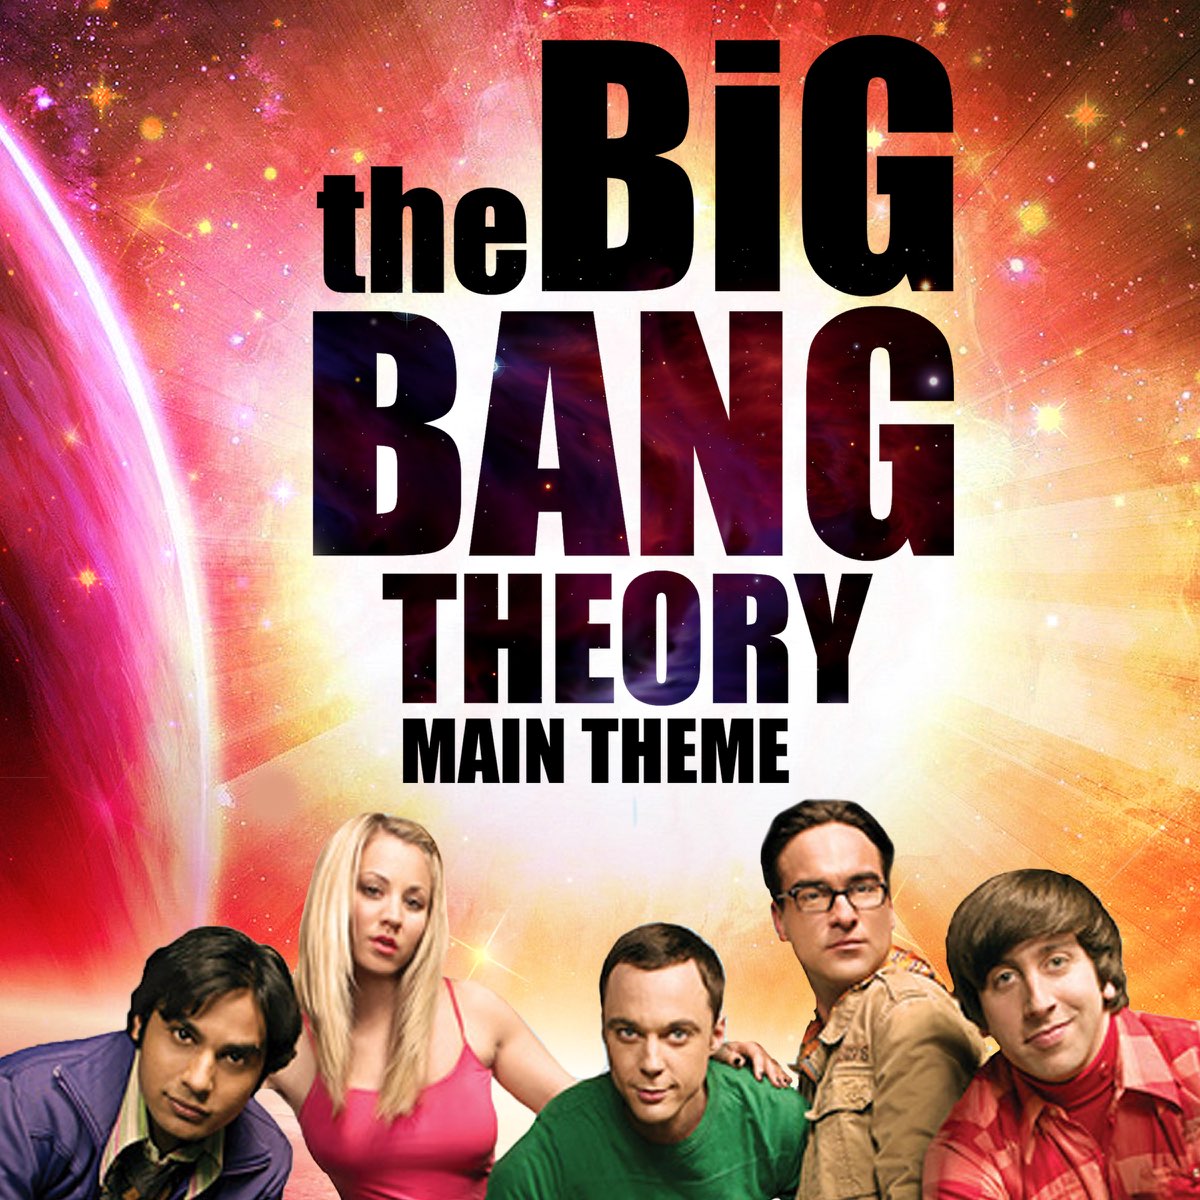 The Big Bang Theory Main Theme - Single by The Moon Band on Apple Music